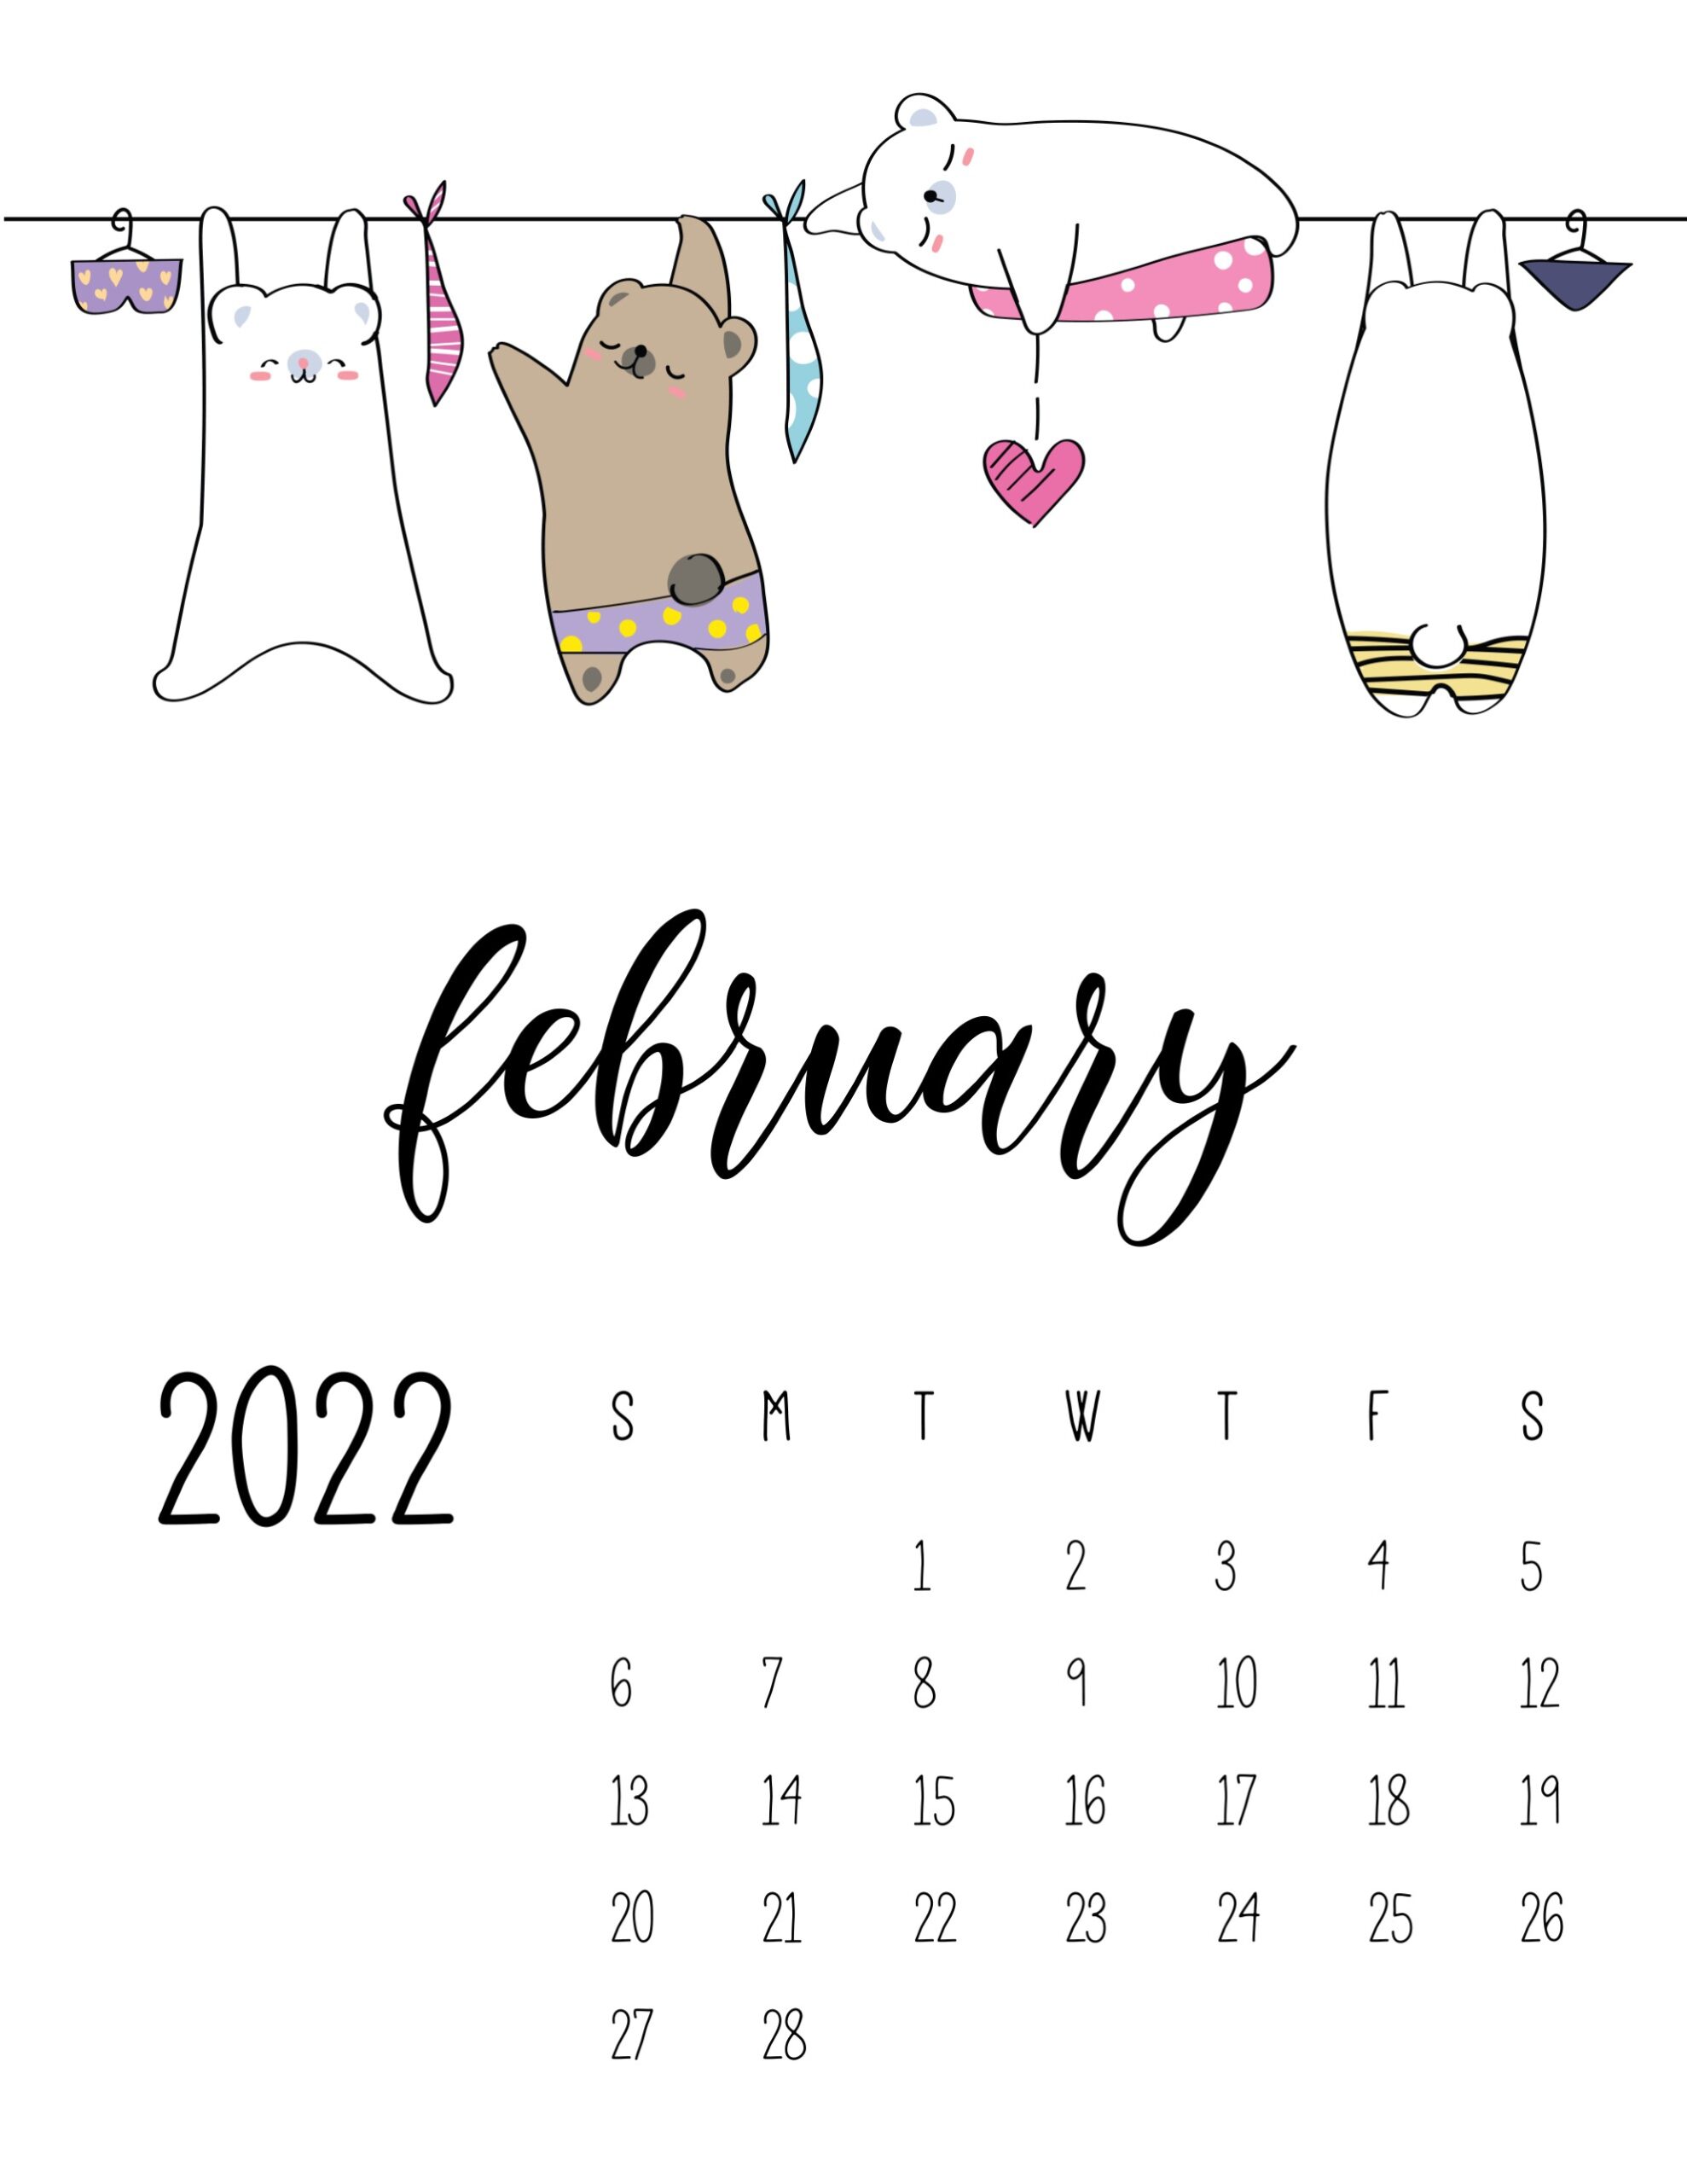 Calendario 2022 lavanderia fevereiro